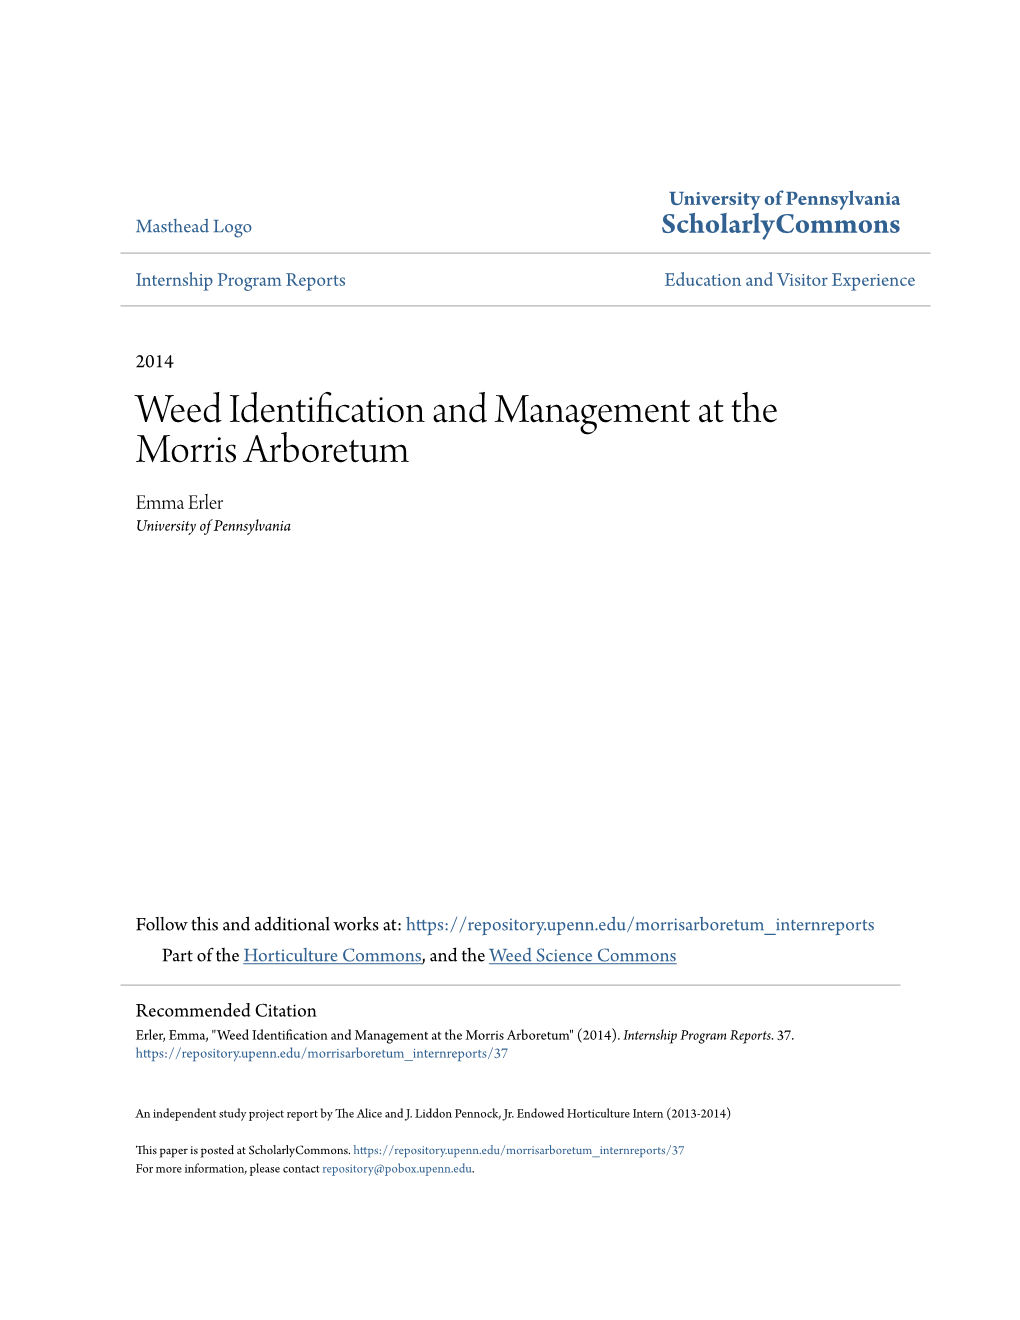 Weed Identification and Management at the Morris Arboretum Emma Erler University of Pennsylvania